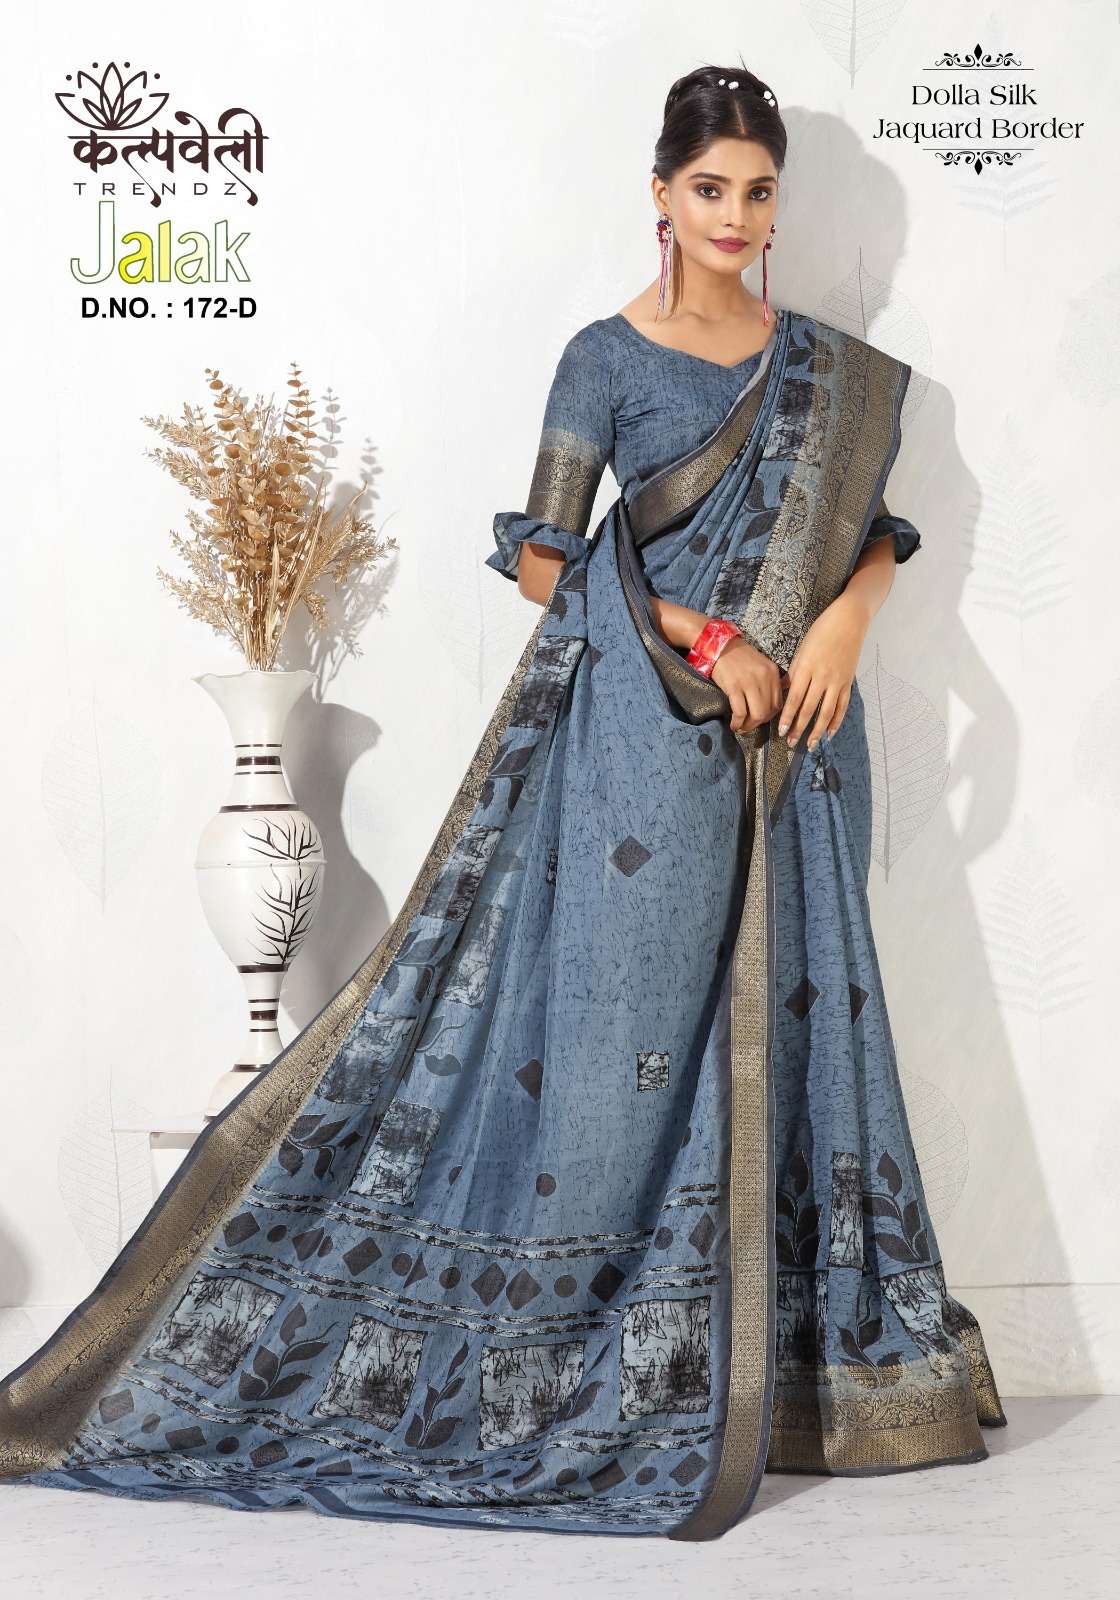 kalpavelly trendz jalak 172 fancy print dola silk saree supplier